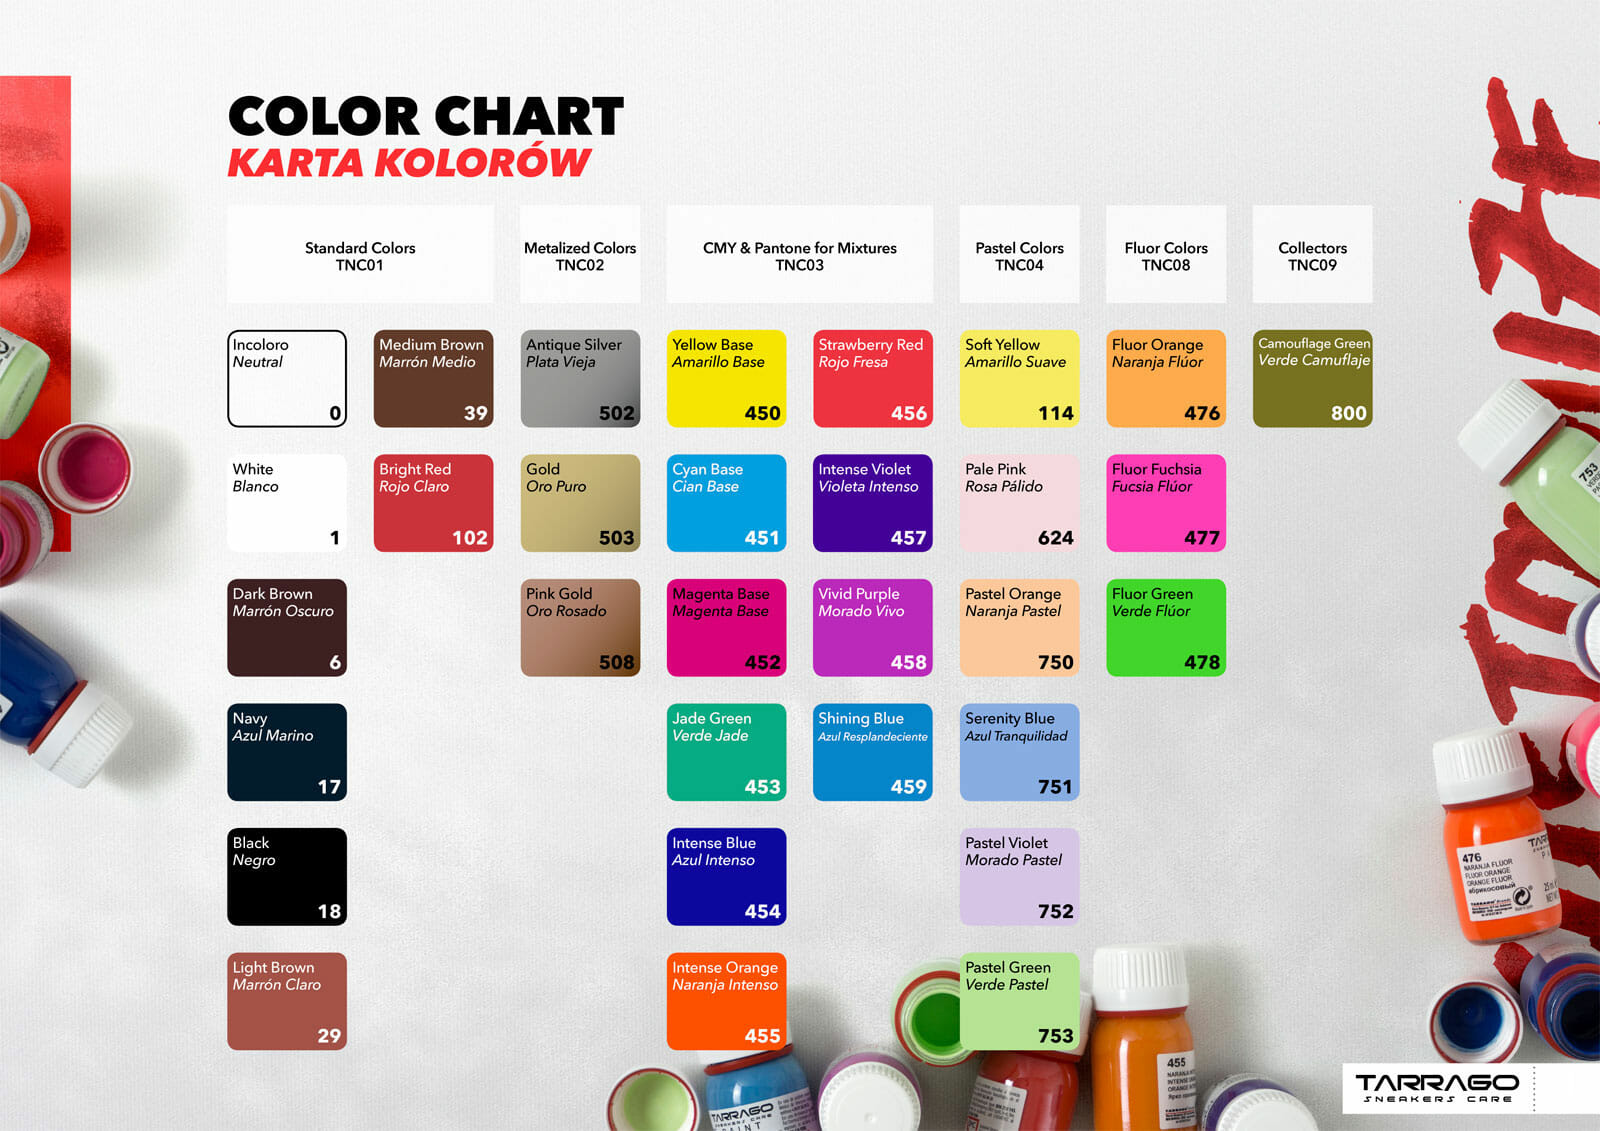 Karta kolorów Tarrago Sneakers Paint